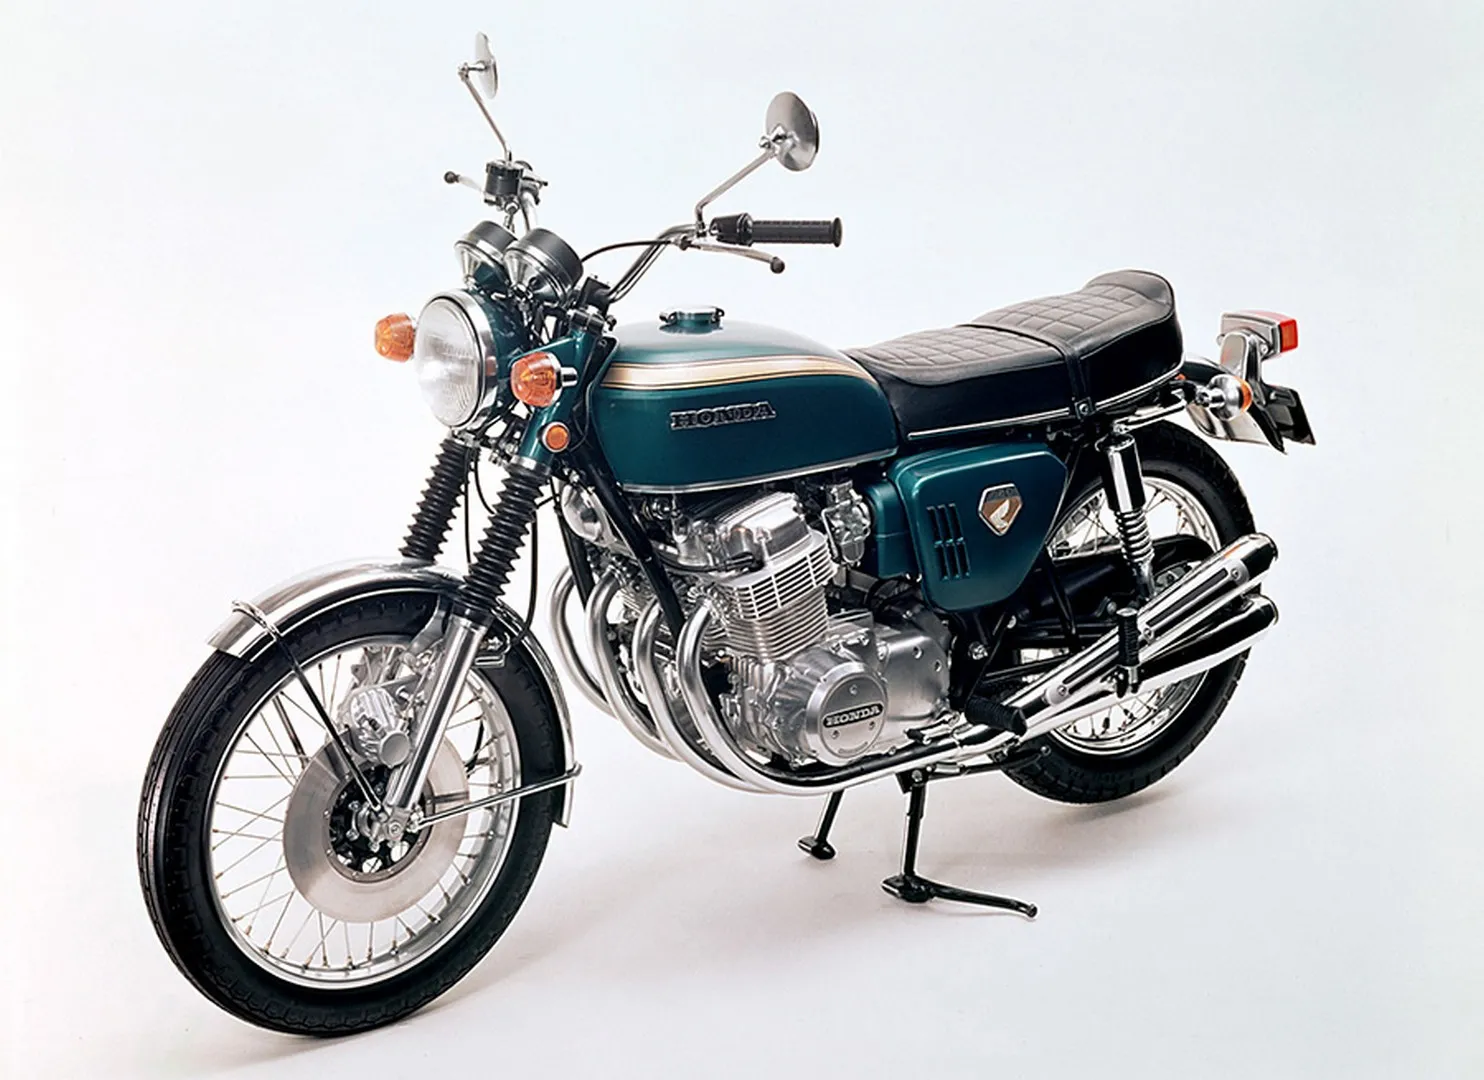 Moto del día: Honda CB 750 Four (1969)